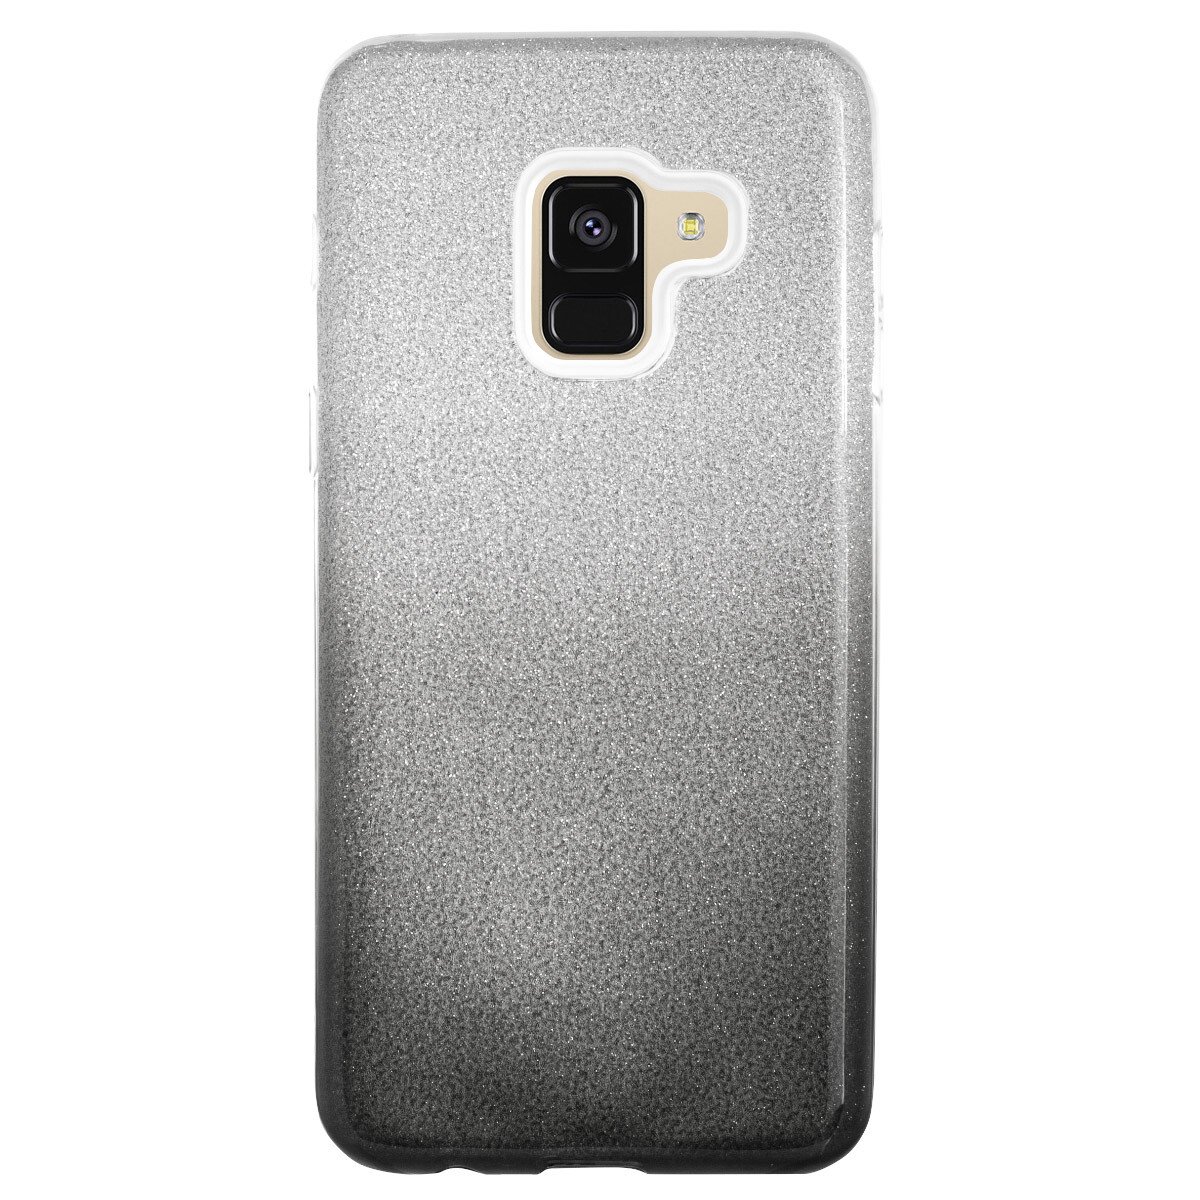 Husa Silicon Samsung Galaxy A8 2018, Glitter Negru thumb